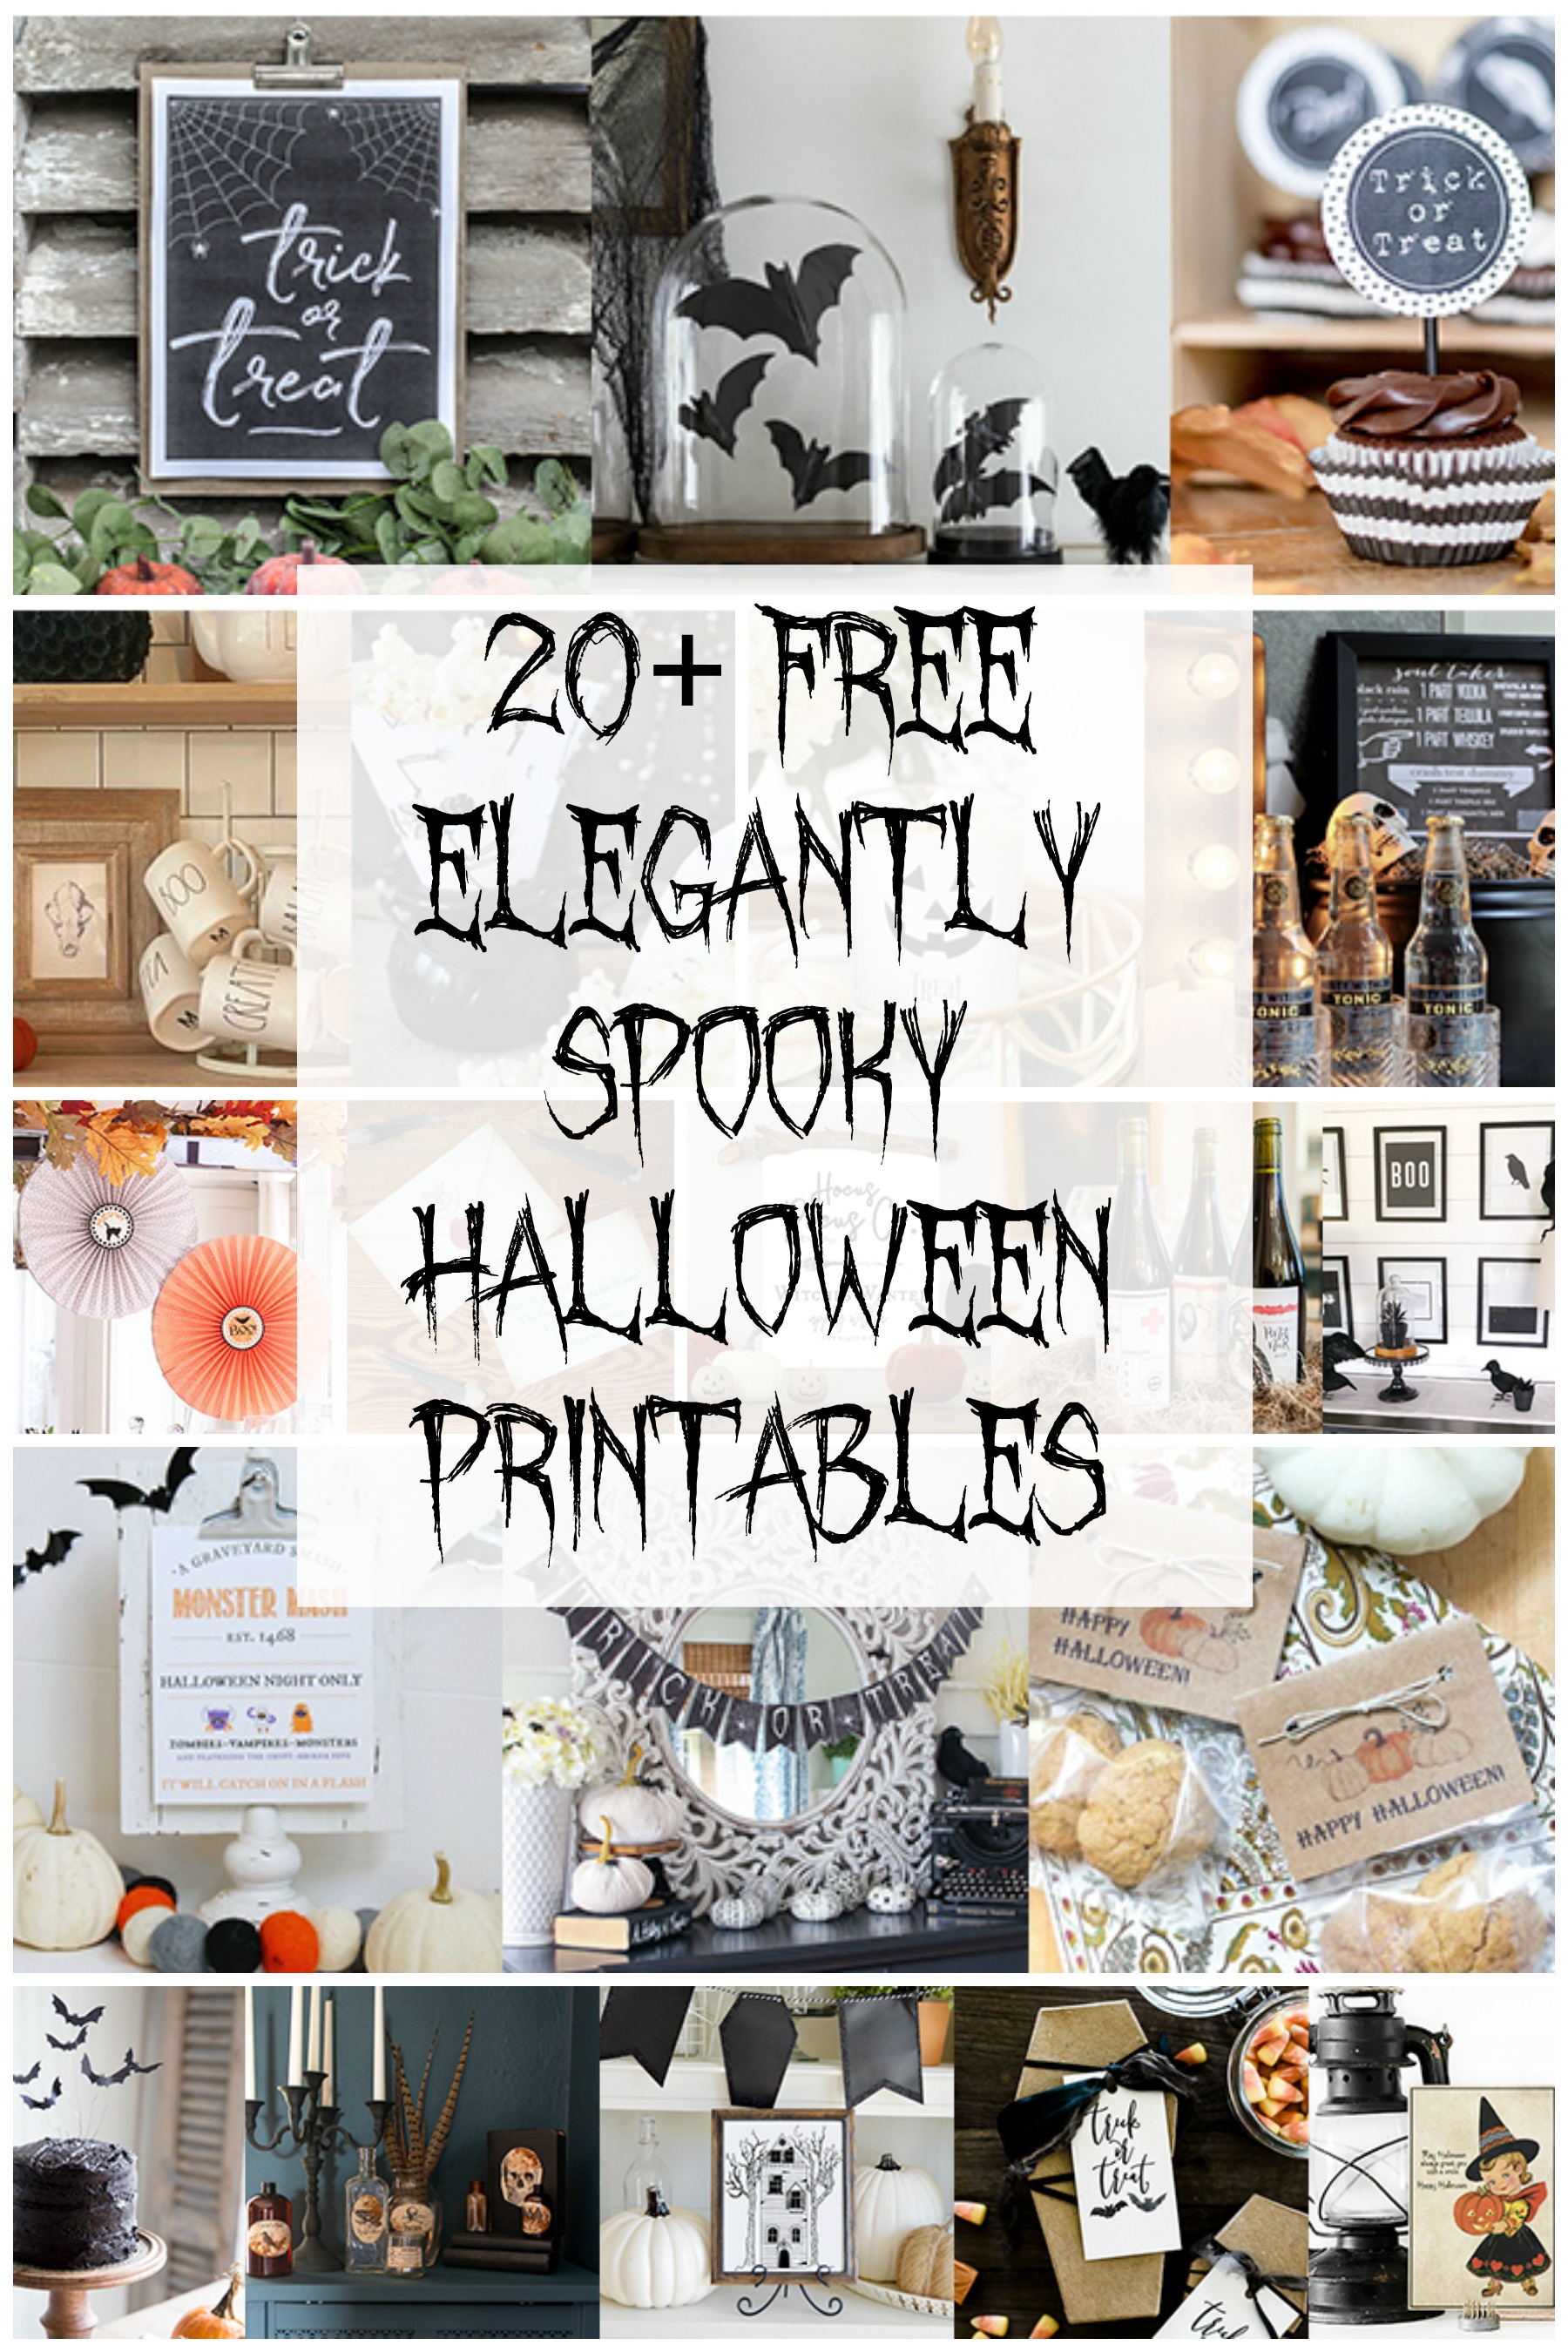 20+ Free Elegantly Spooky Halloween Printables poster.